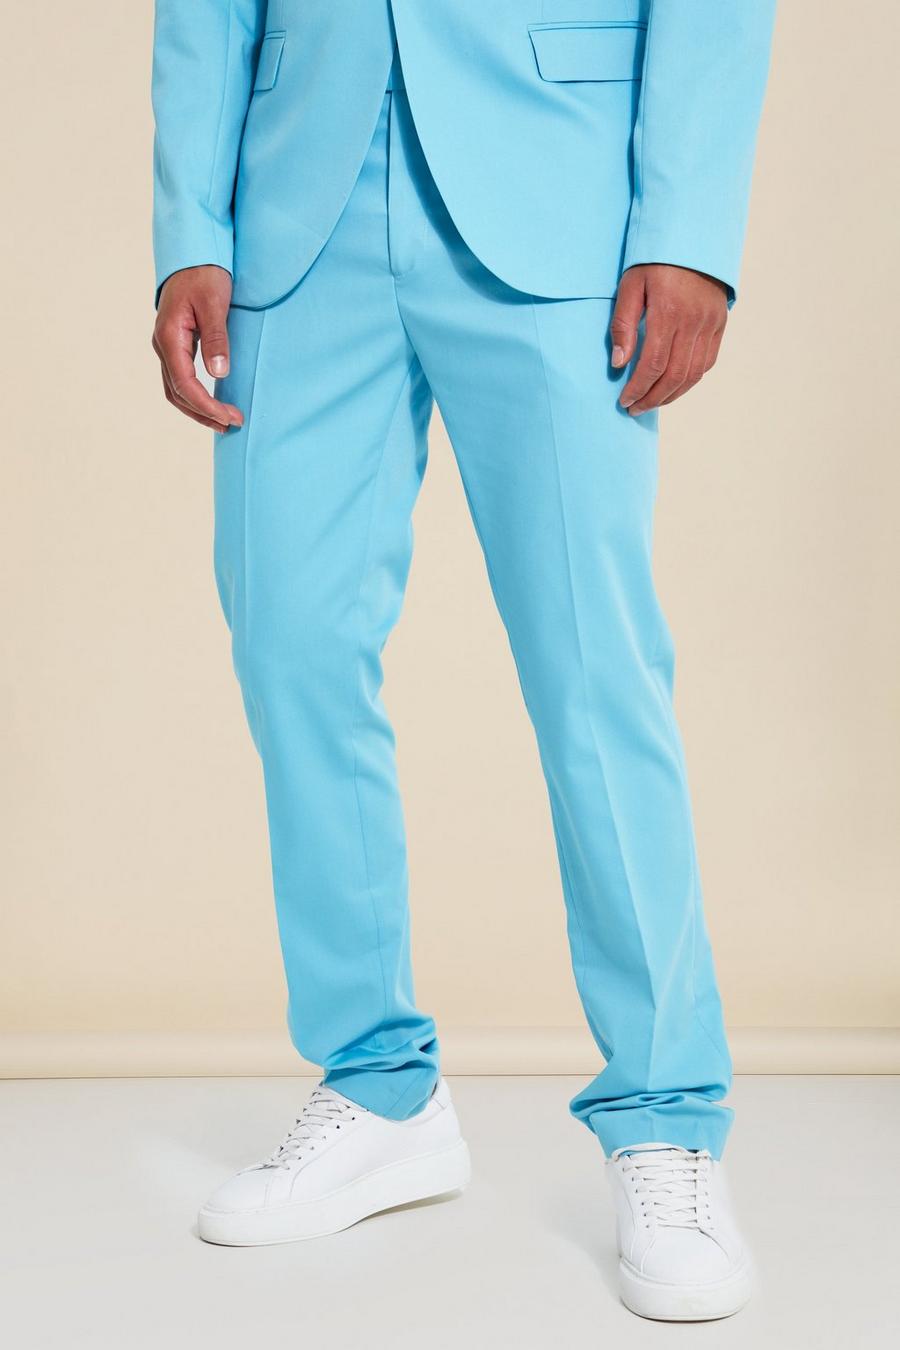 Pantaloni completo Tall Slim Fit, Light blue azul